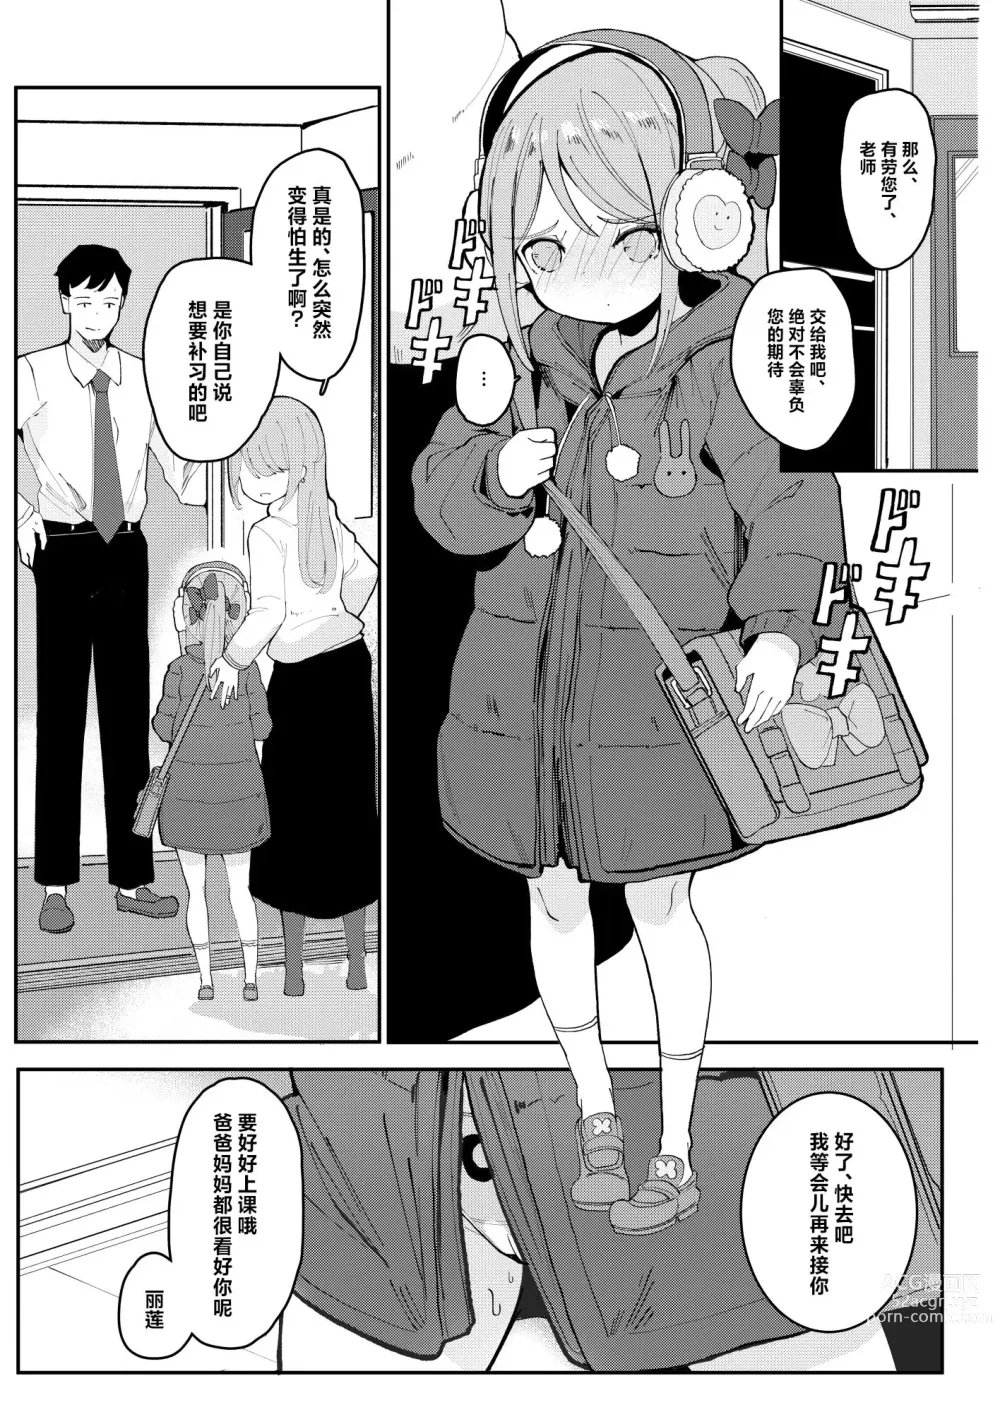 Page 5 of doujinshi 今天瞒着妈妈和家庭教师做了H的事❤